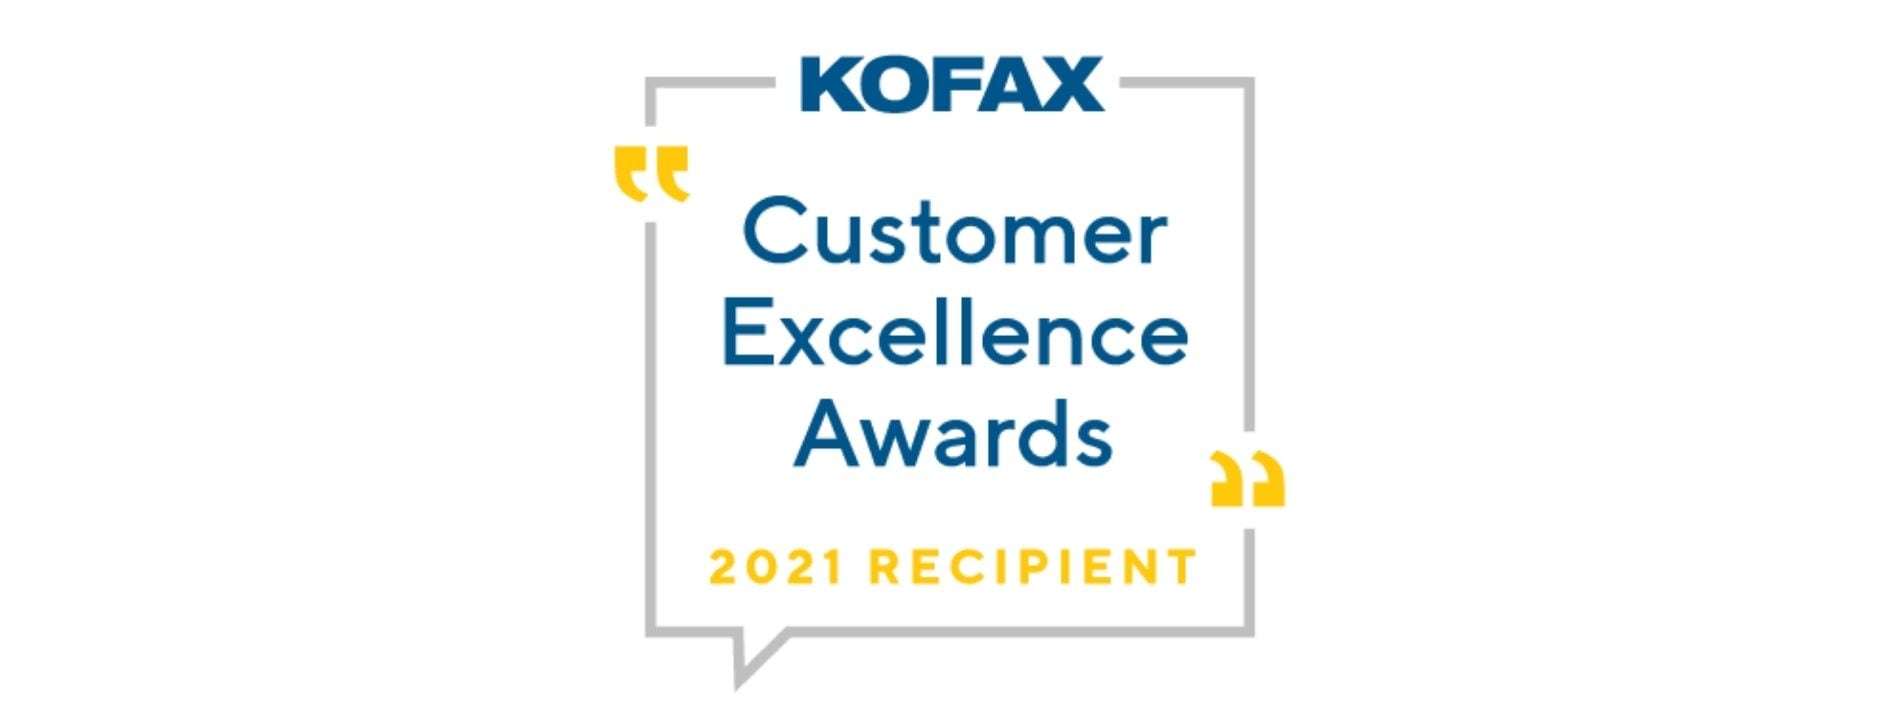 2021 kofax customer excellence awards